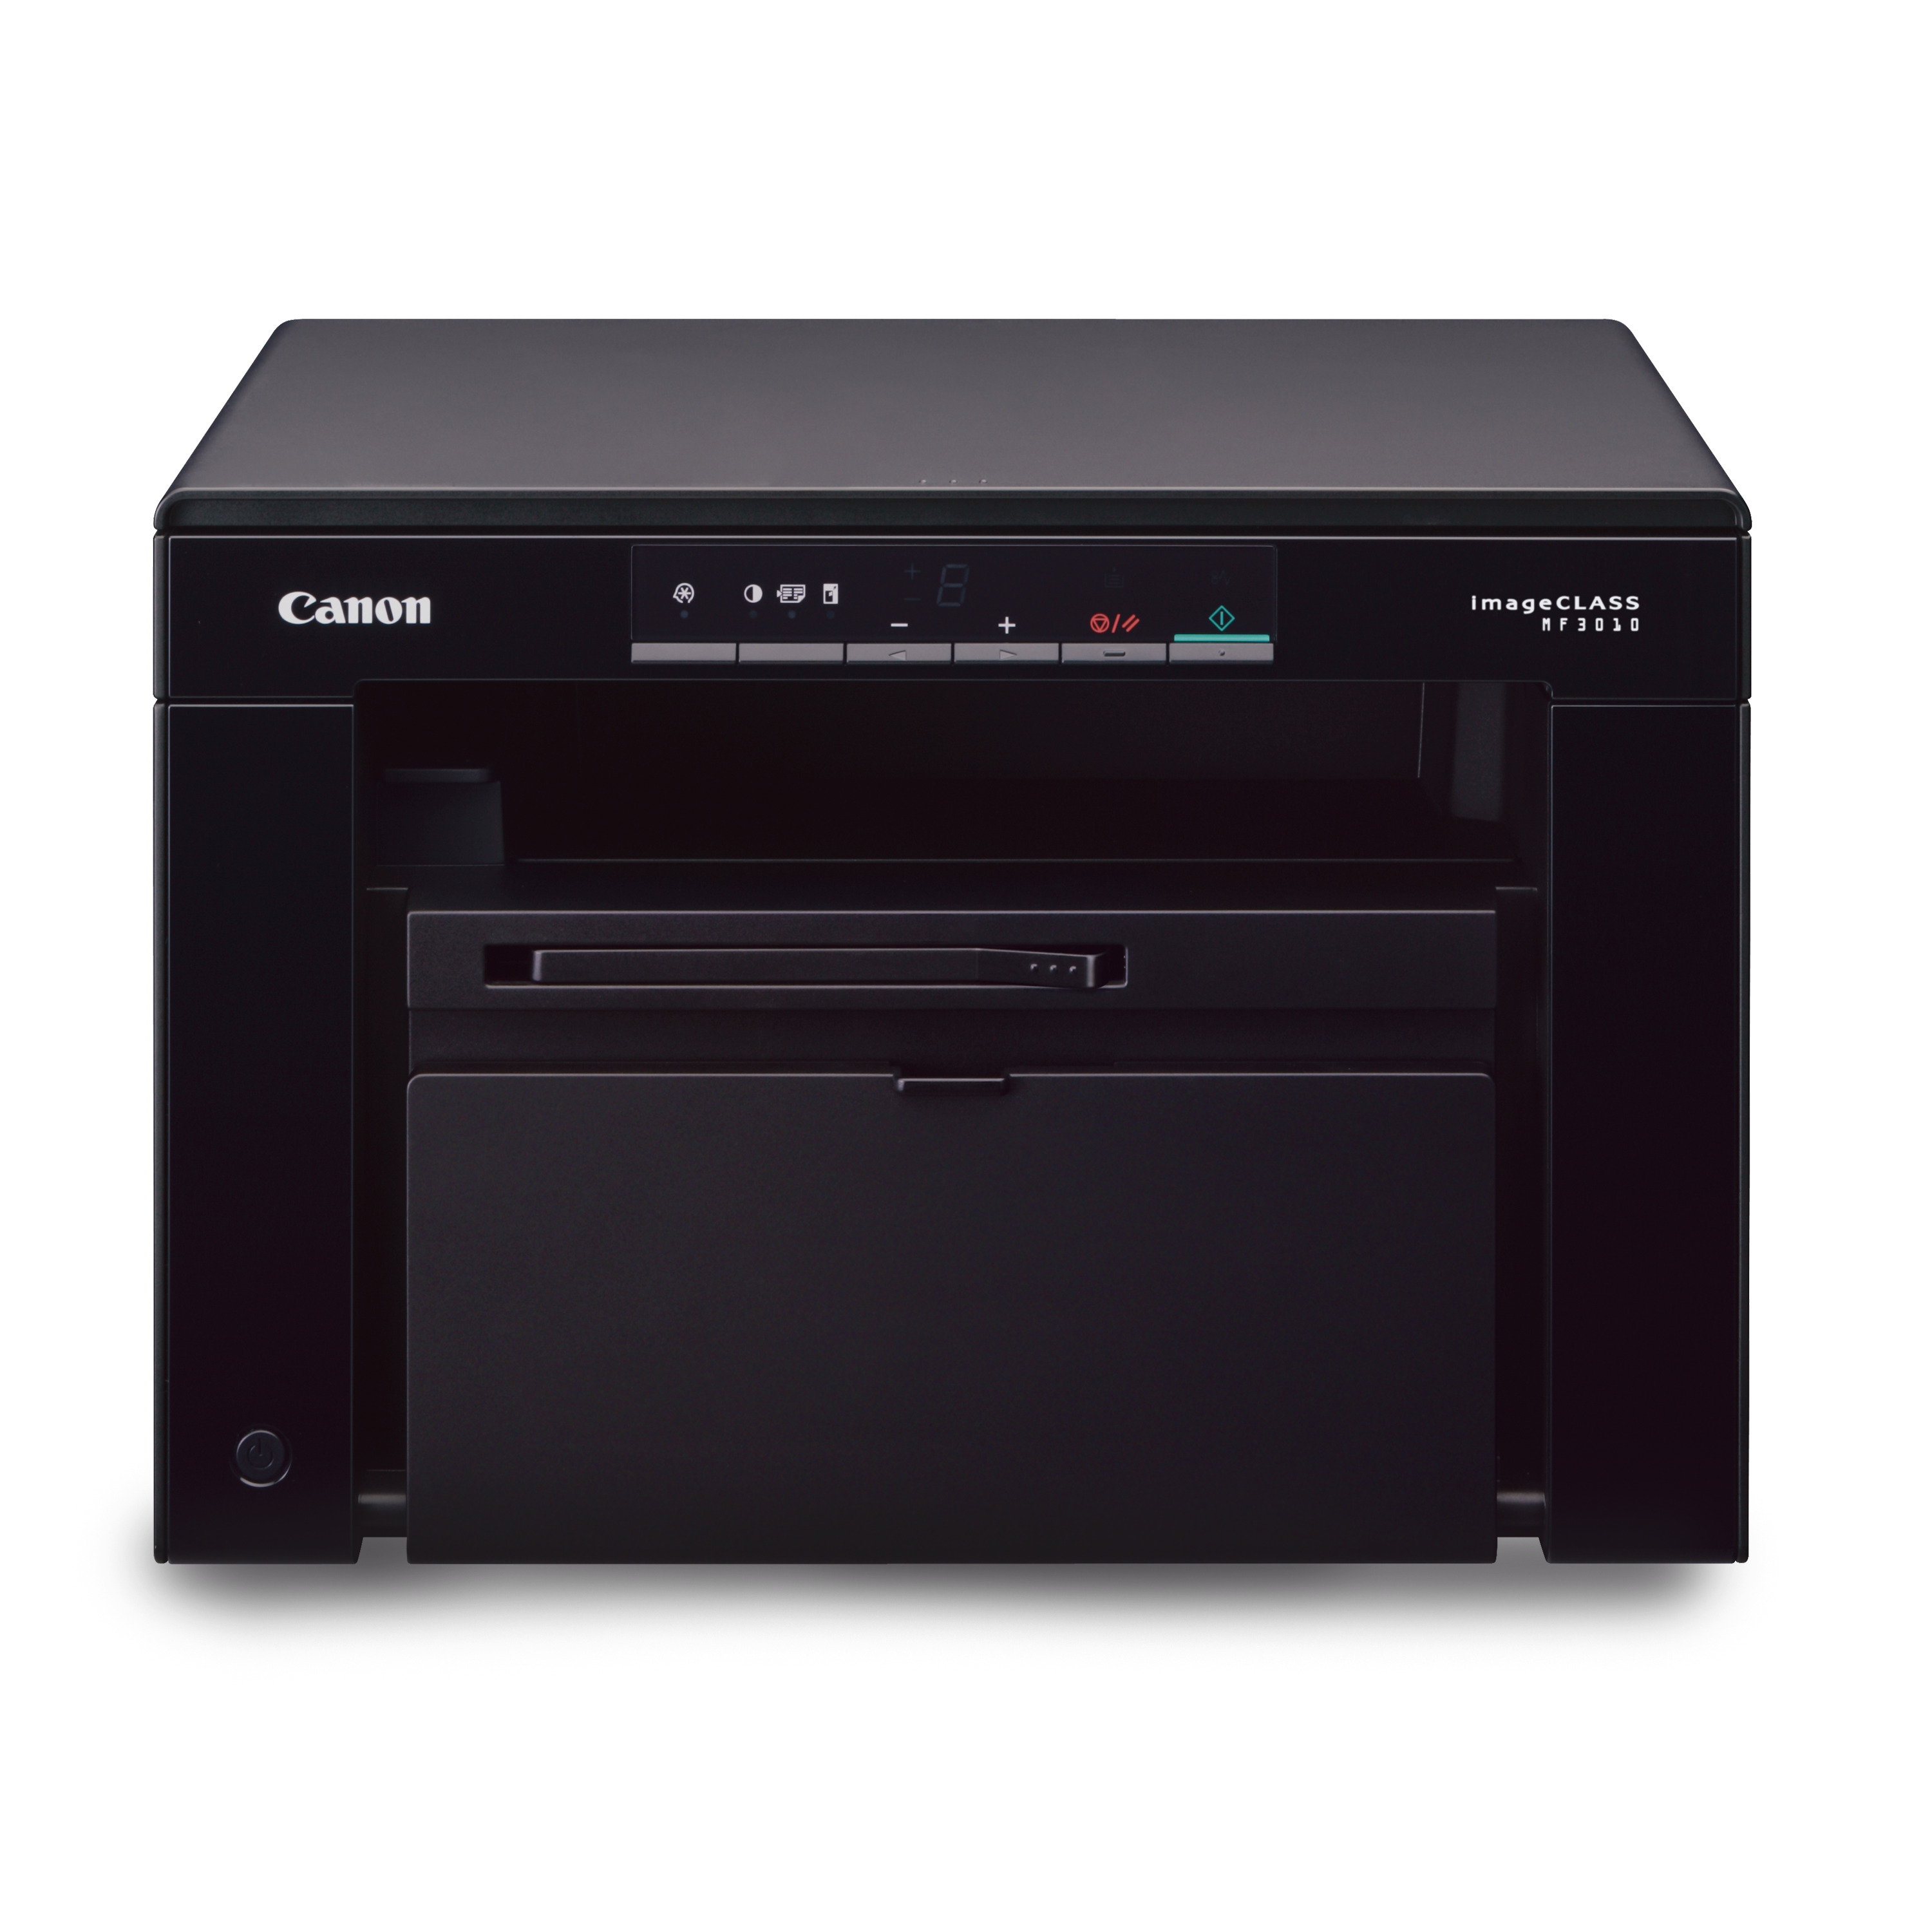 Canon imageCLASS MF3010 - Multifunction Laser Printer - image 1 of 9